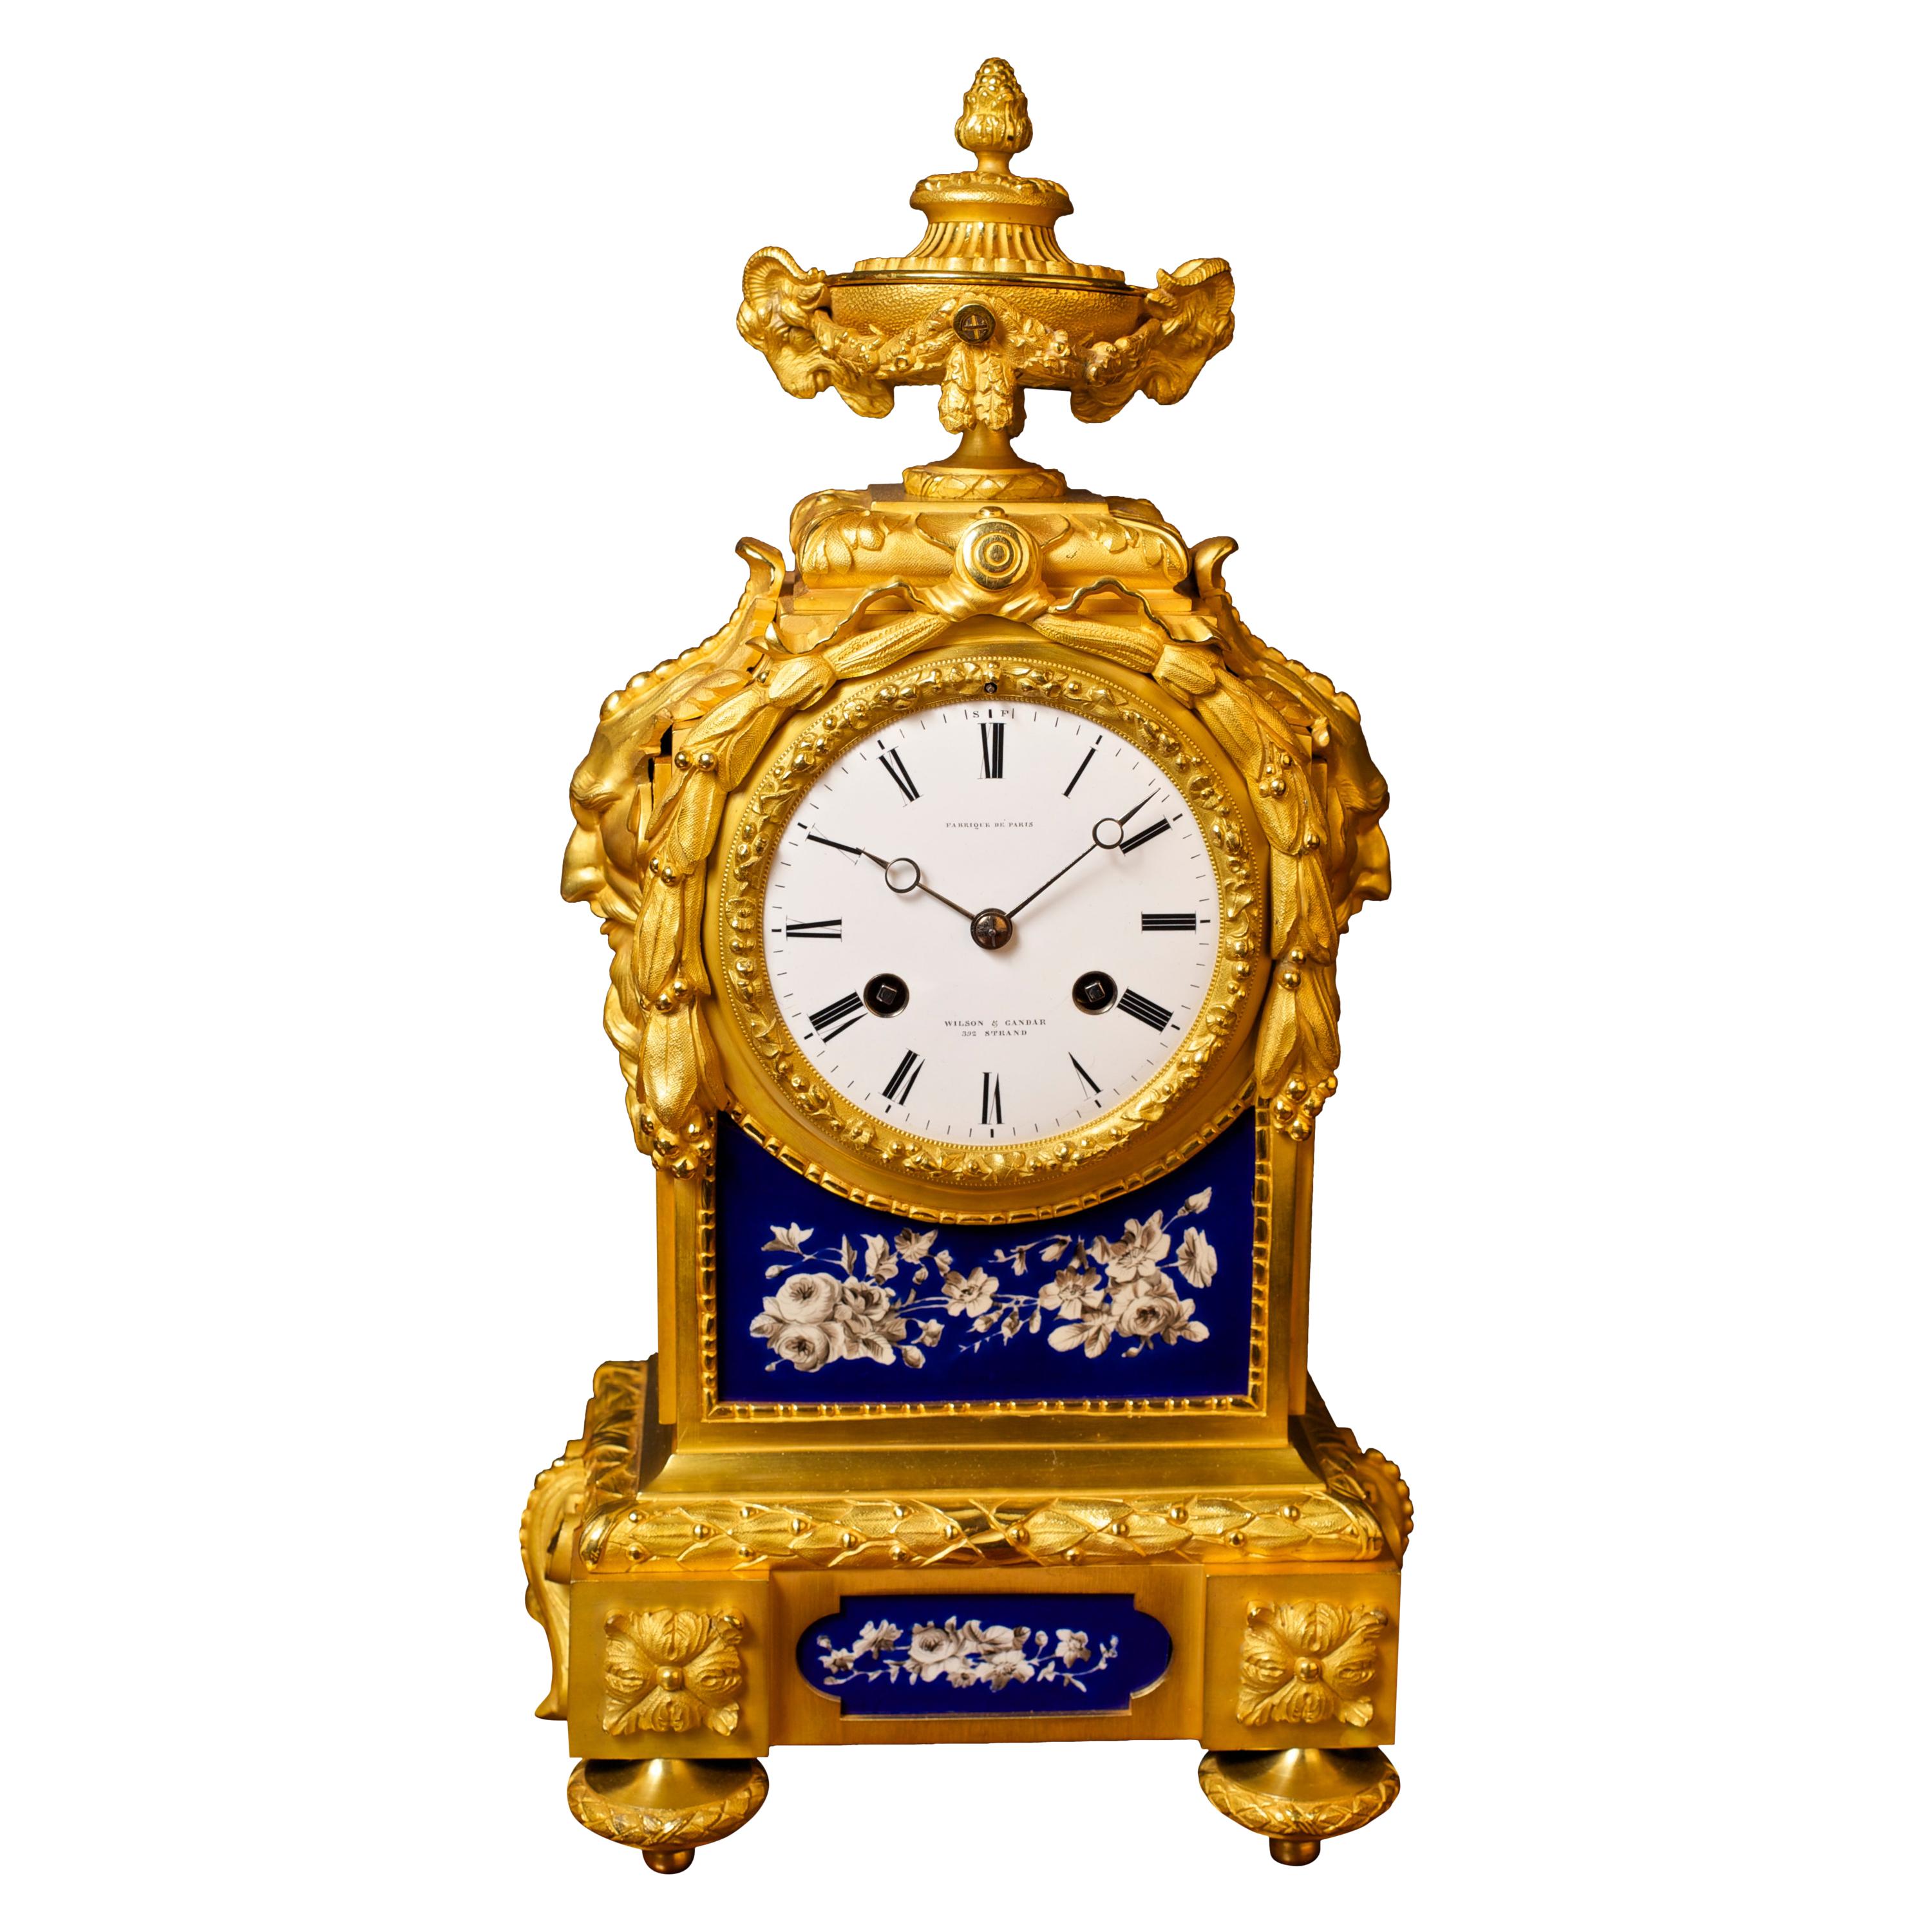 French Ormolu and Porcelain Mantel Clock by Wilson & Gander, London